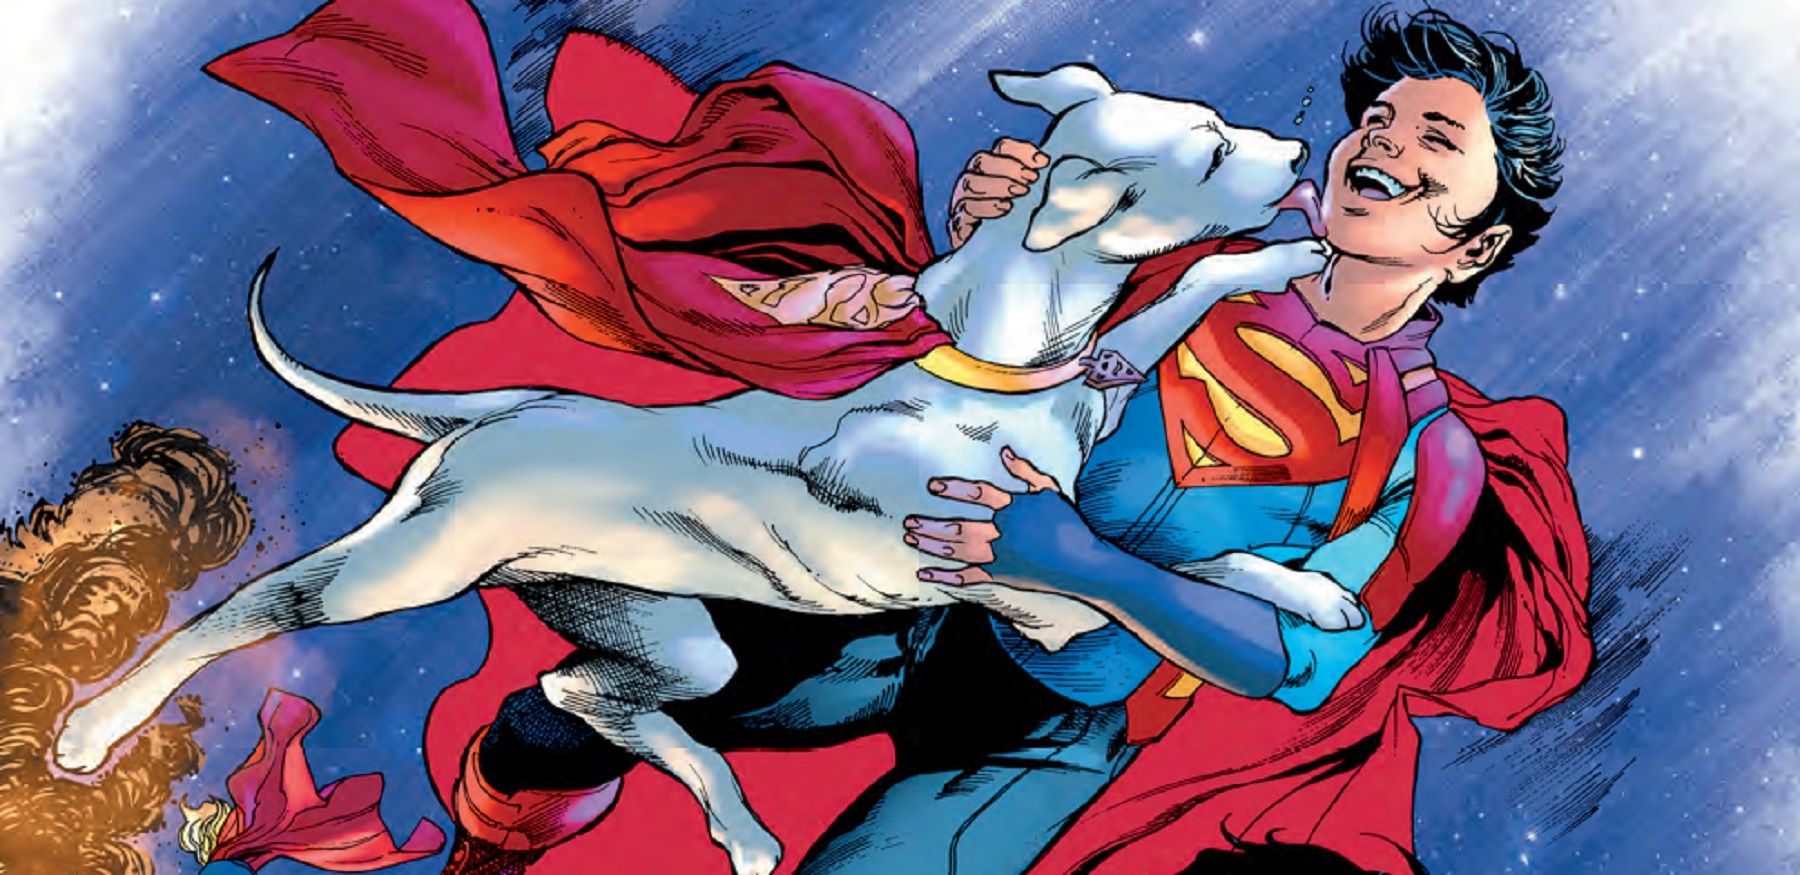 jon kent as superboy with krypto the super dog